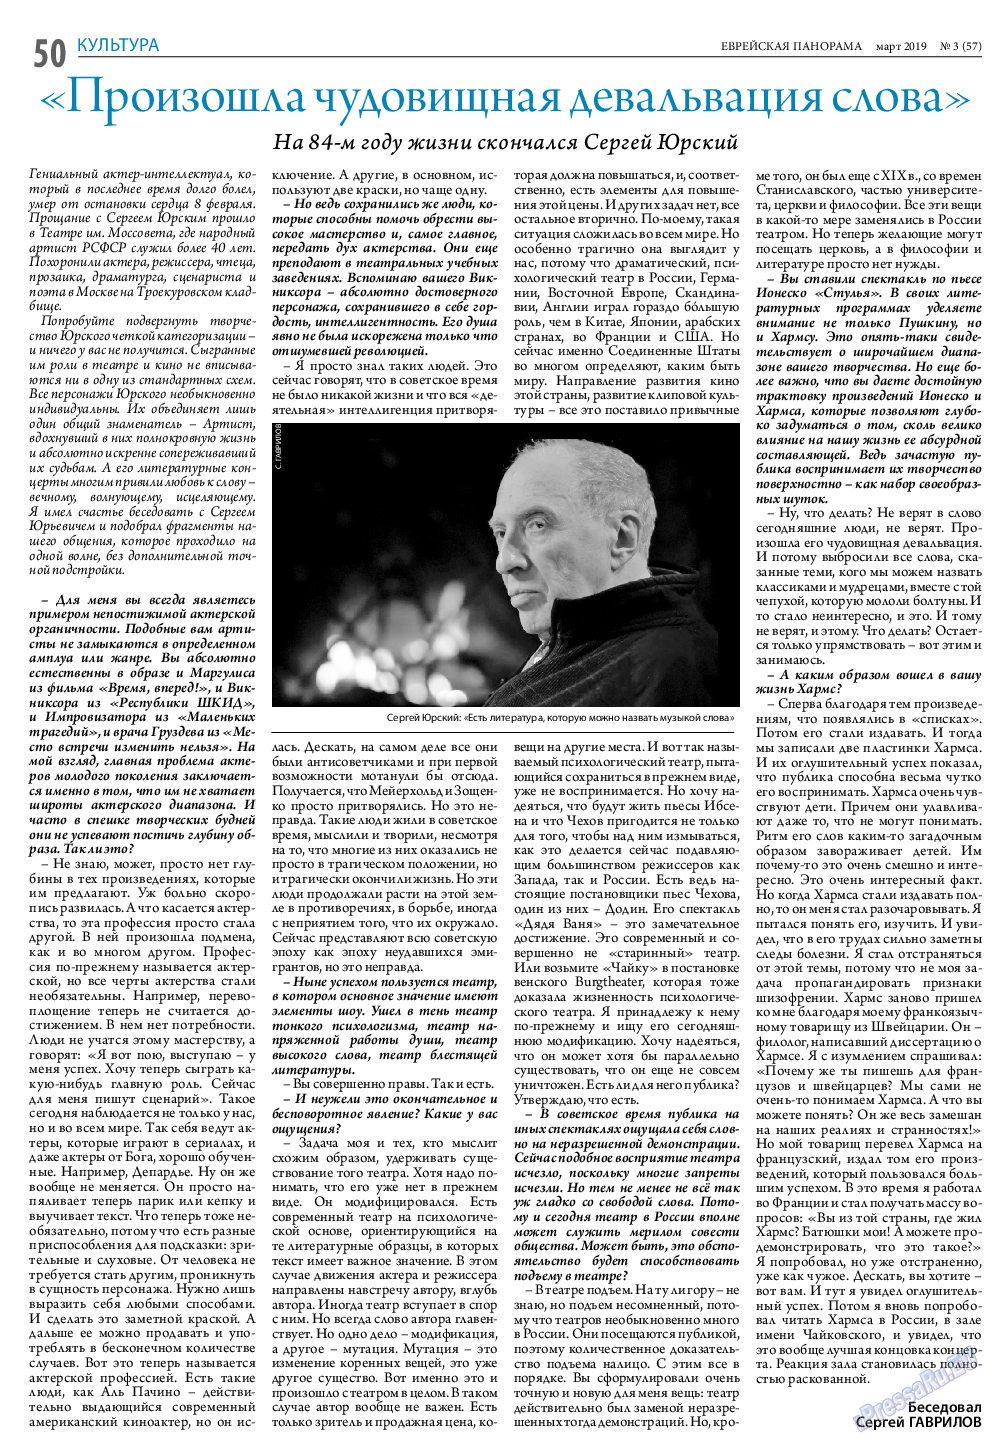 Еврейская панорама, газета. 2019 №3 стр.50